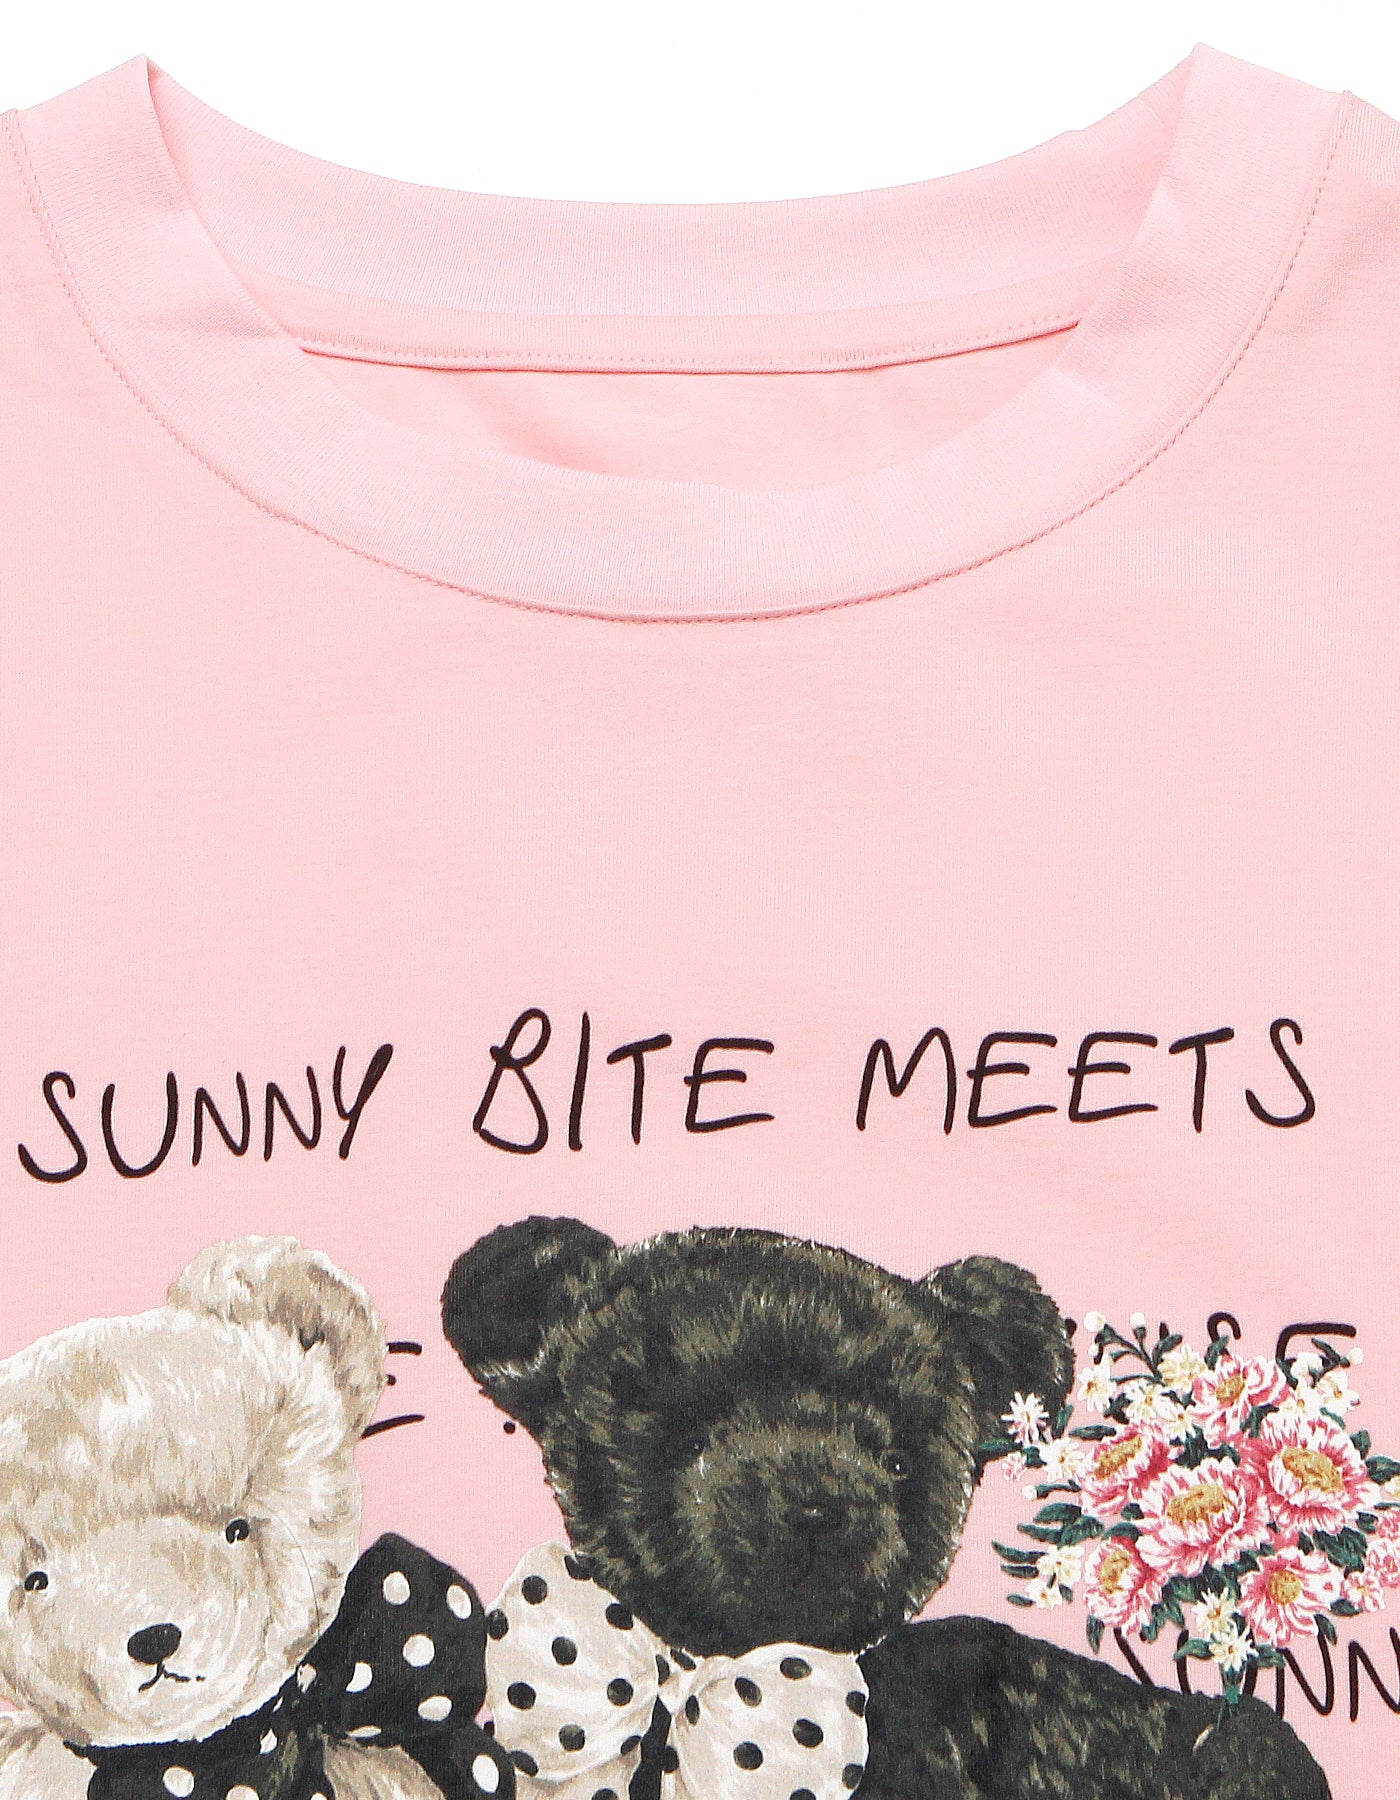 little sunny bite と pink house Bear message big tee / PINK